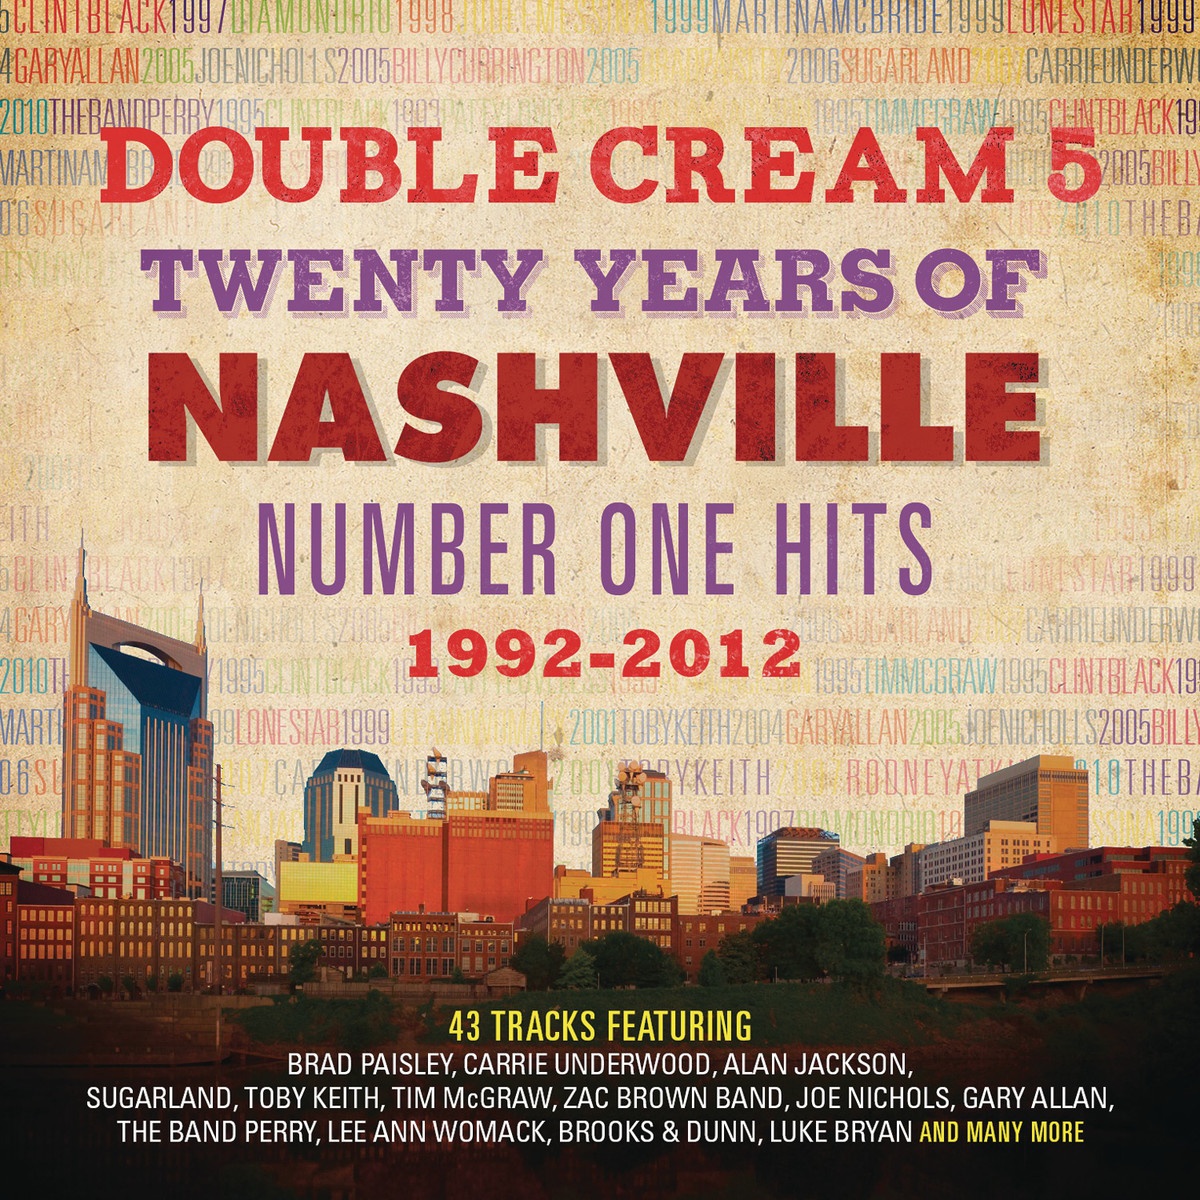 Double Cream 5: 20 Years of Nashville #1's 1992-2012